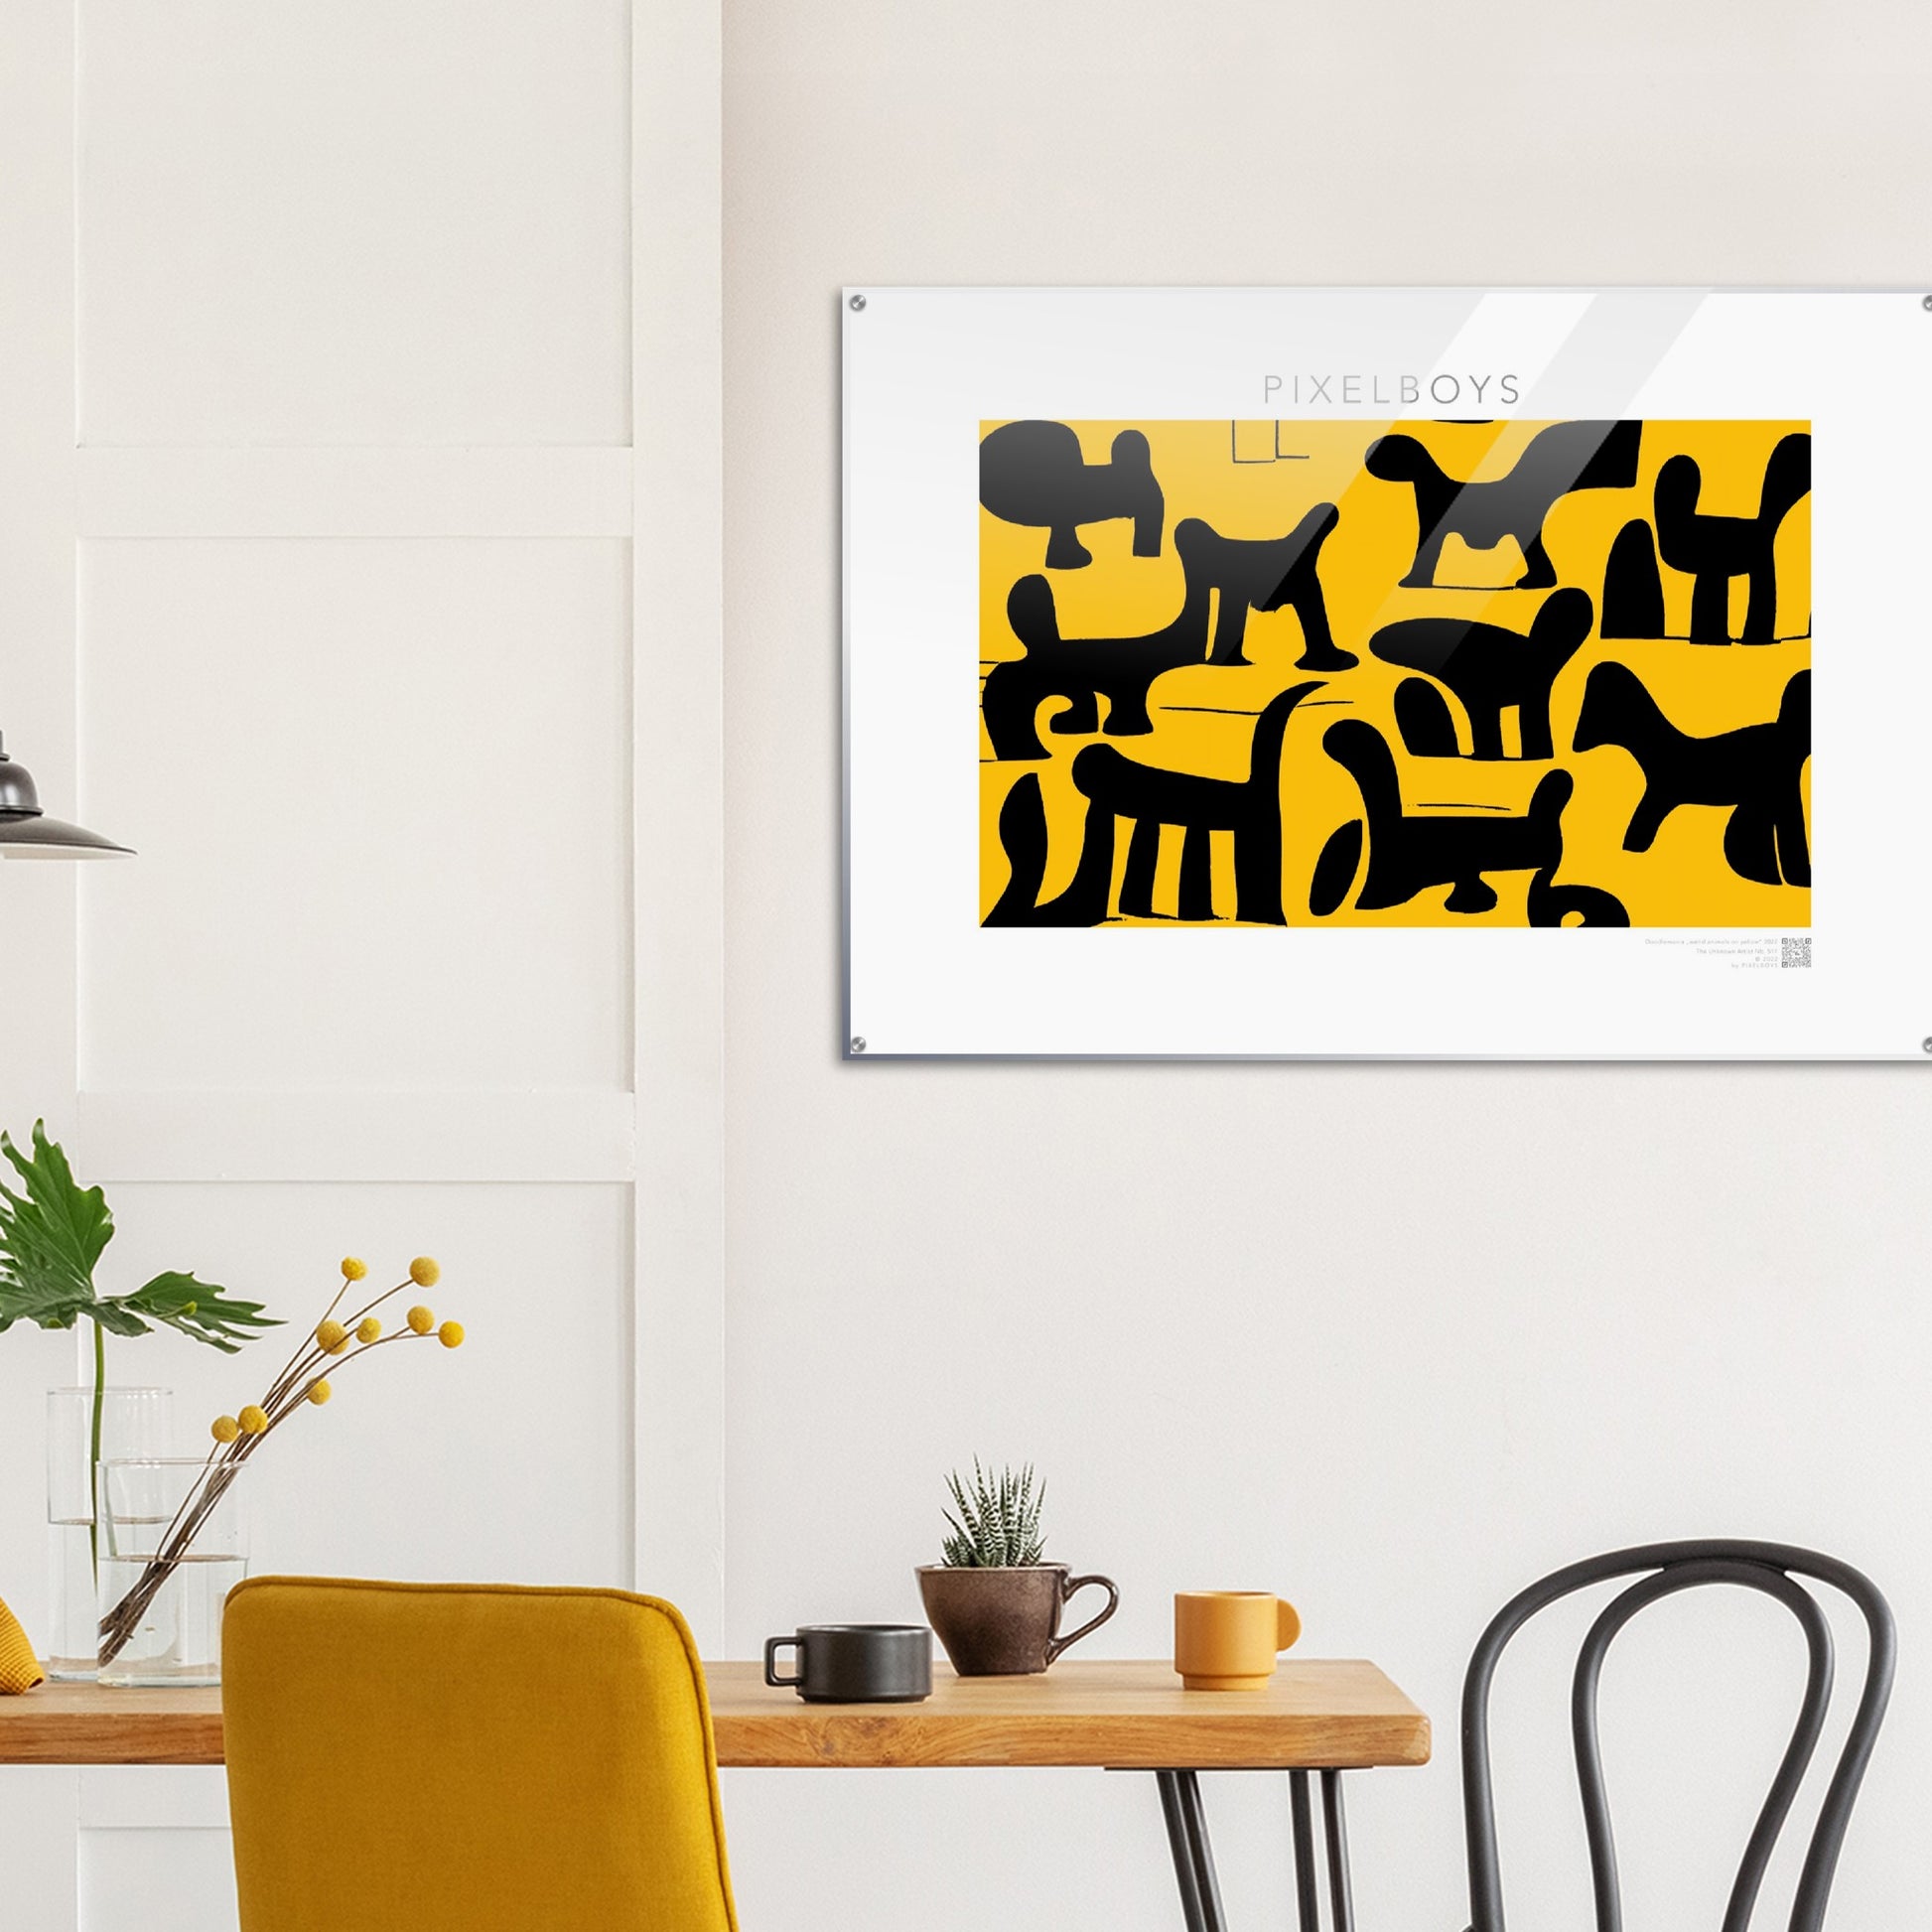 Acrylbild - Doodlemania "weird animals on yellow" - No.3 - bedruckte Tasse-  gelb - Cup - Hunde - Katzen - Doodle Kunst - dogs - Cats - gastro - Poster mit Rahmen - doodle artwork - Acrylbild - Kunstdruck - Wandbild - office Poster - Poster with frame -  Künstler: Pixelboys & The Unknown Artist Nb.517 - keith haring - Gastro Art - anti stress art - Art Brand - Kunstdruck - Gastro Tasse - 